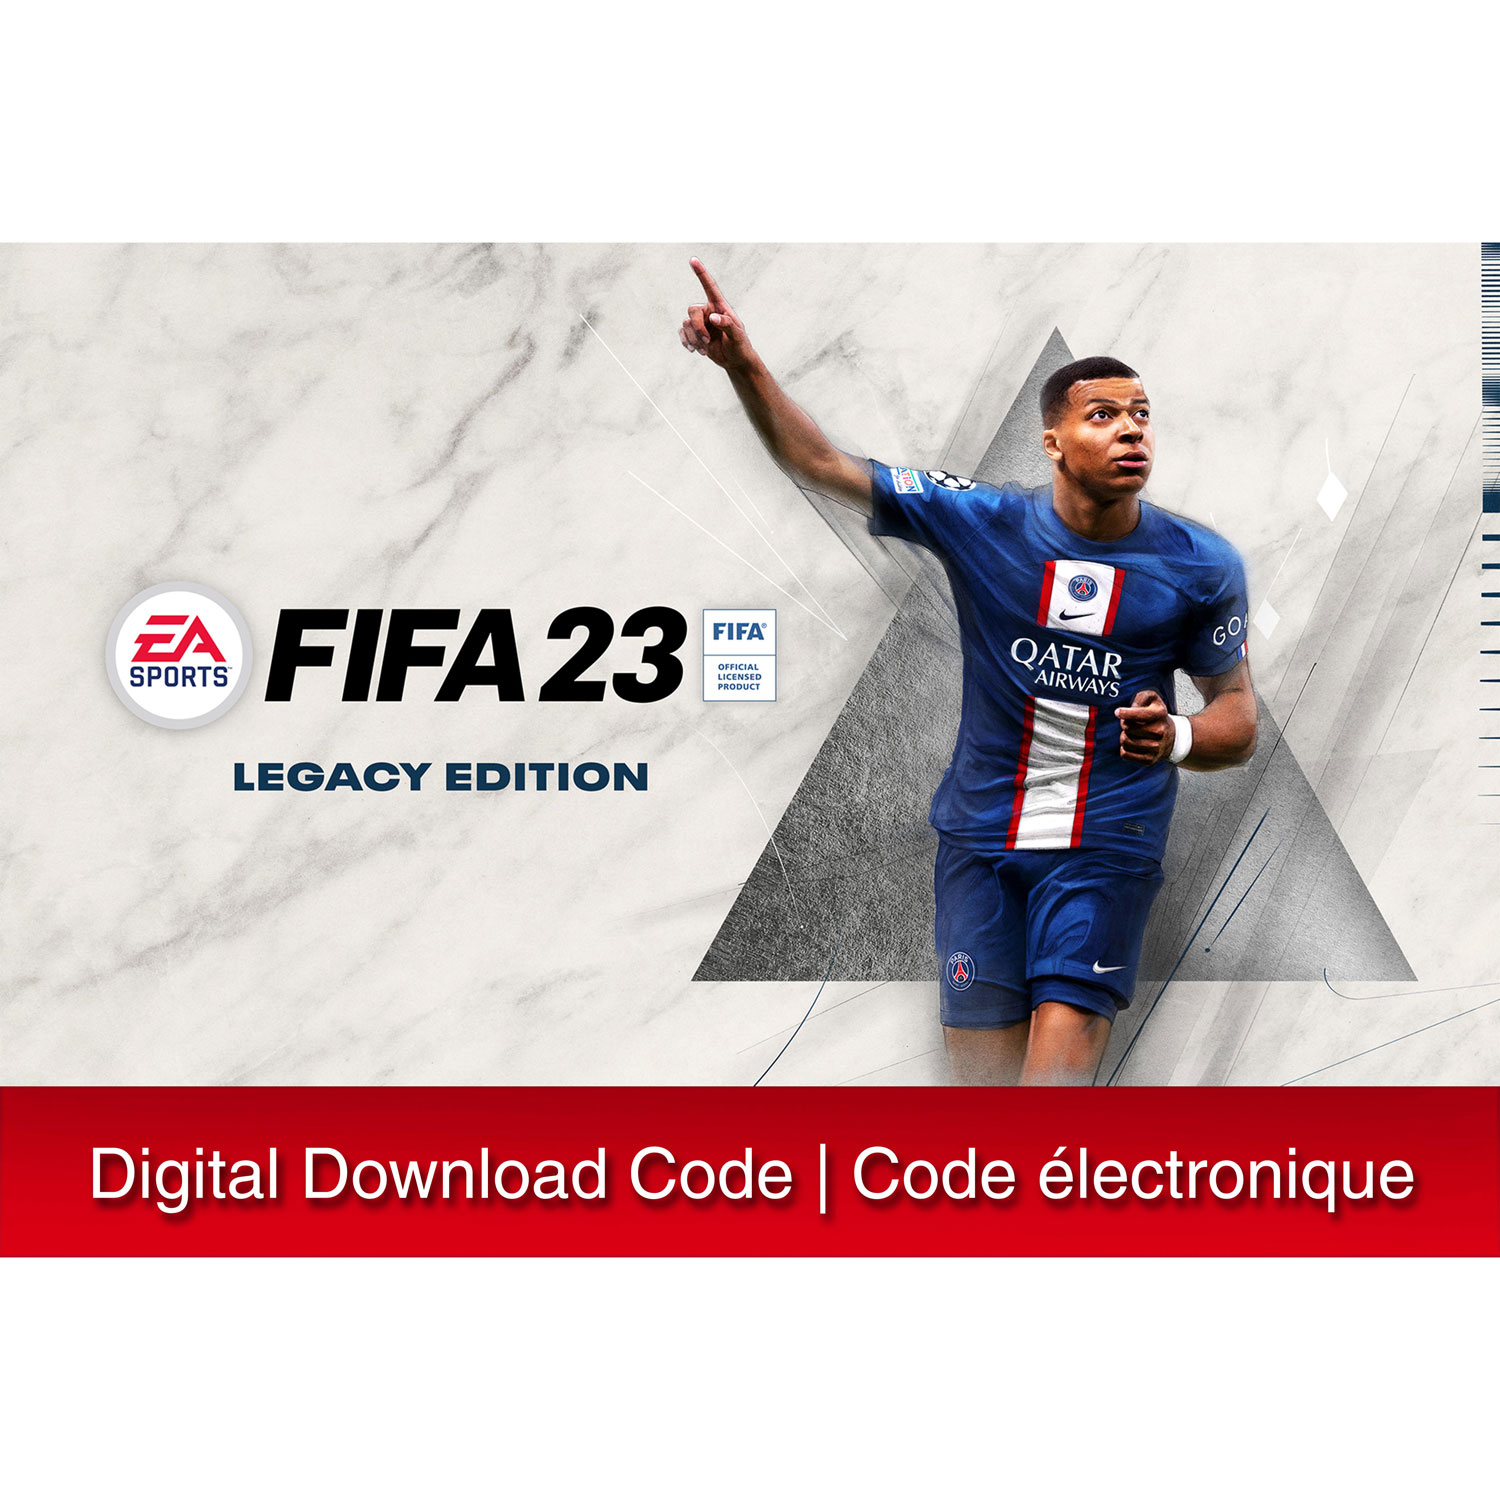 FIFA 23 Legacy Edition (Switch) - Digital Download